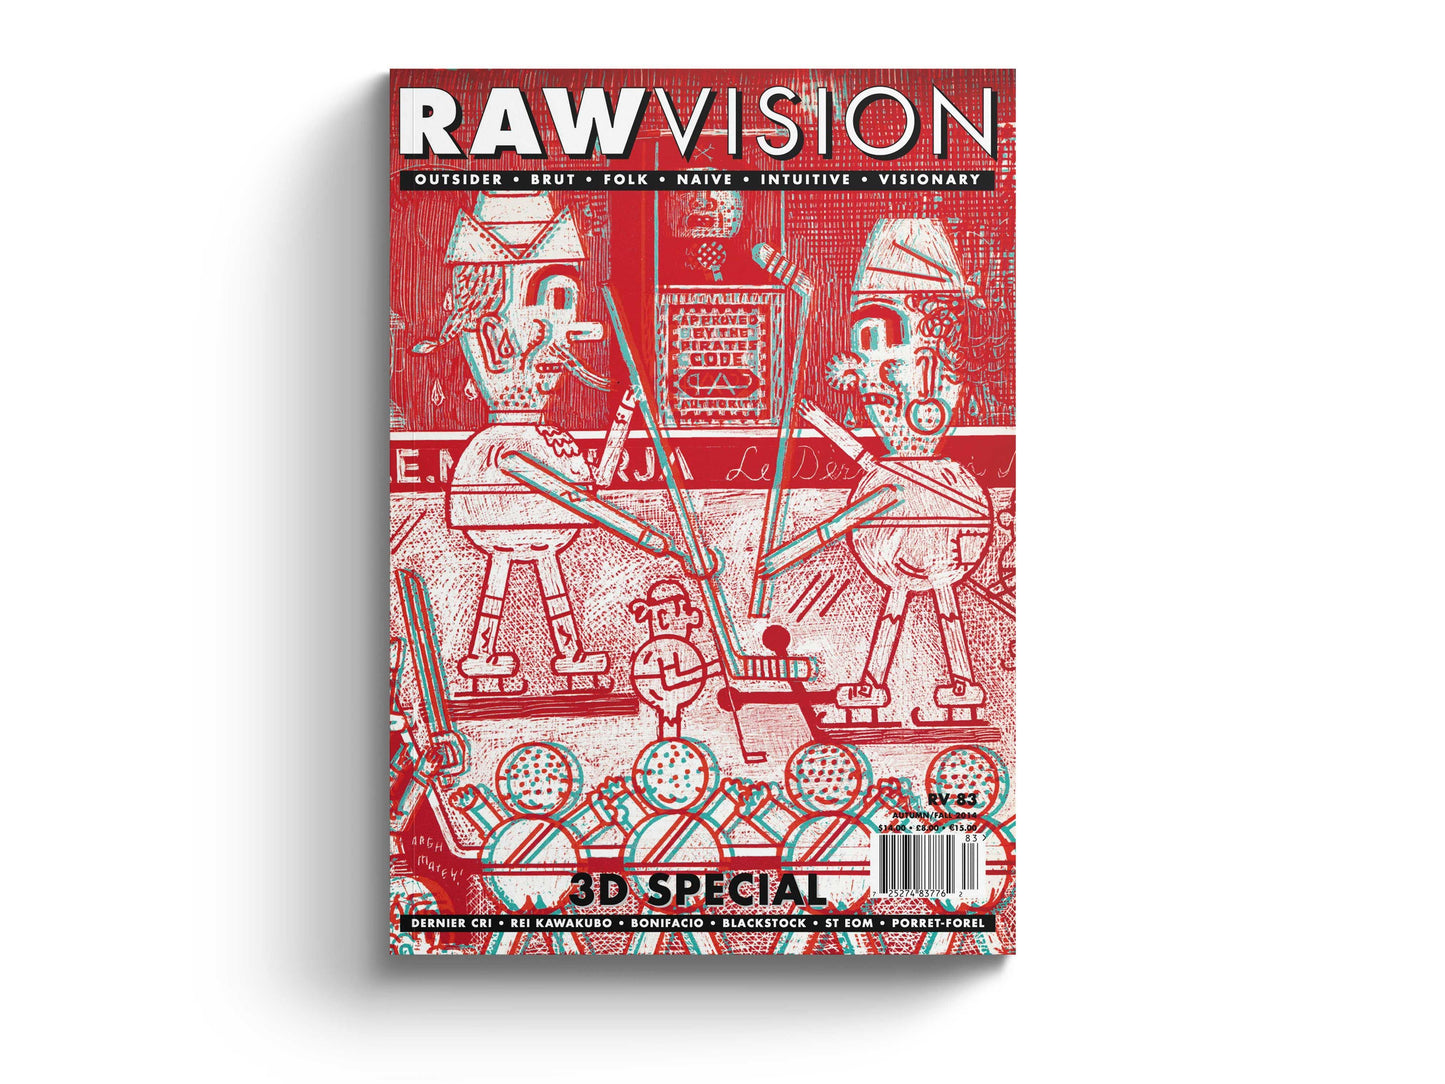 Raw Vision Magazine Issue #83